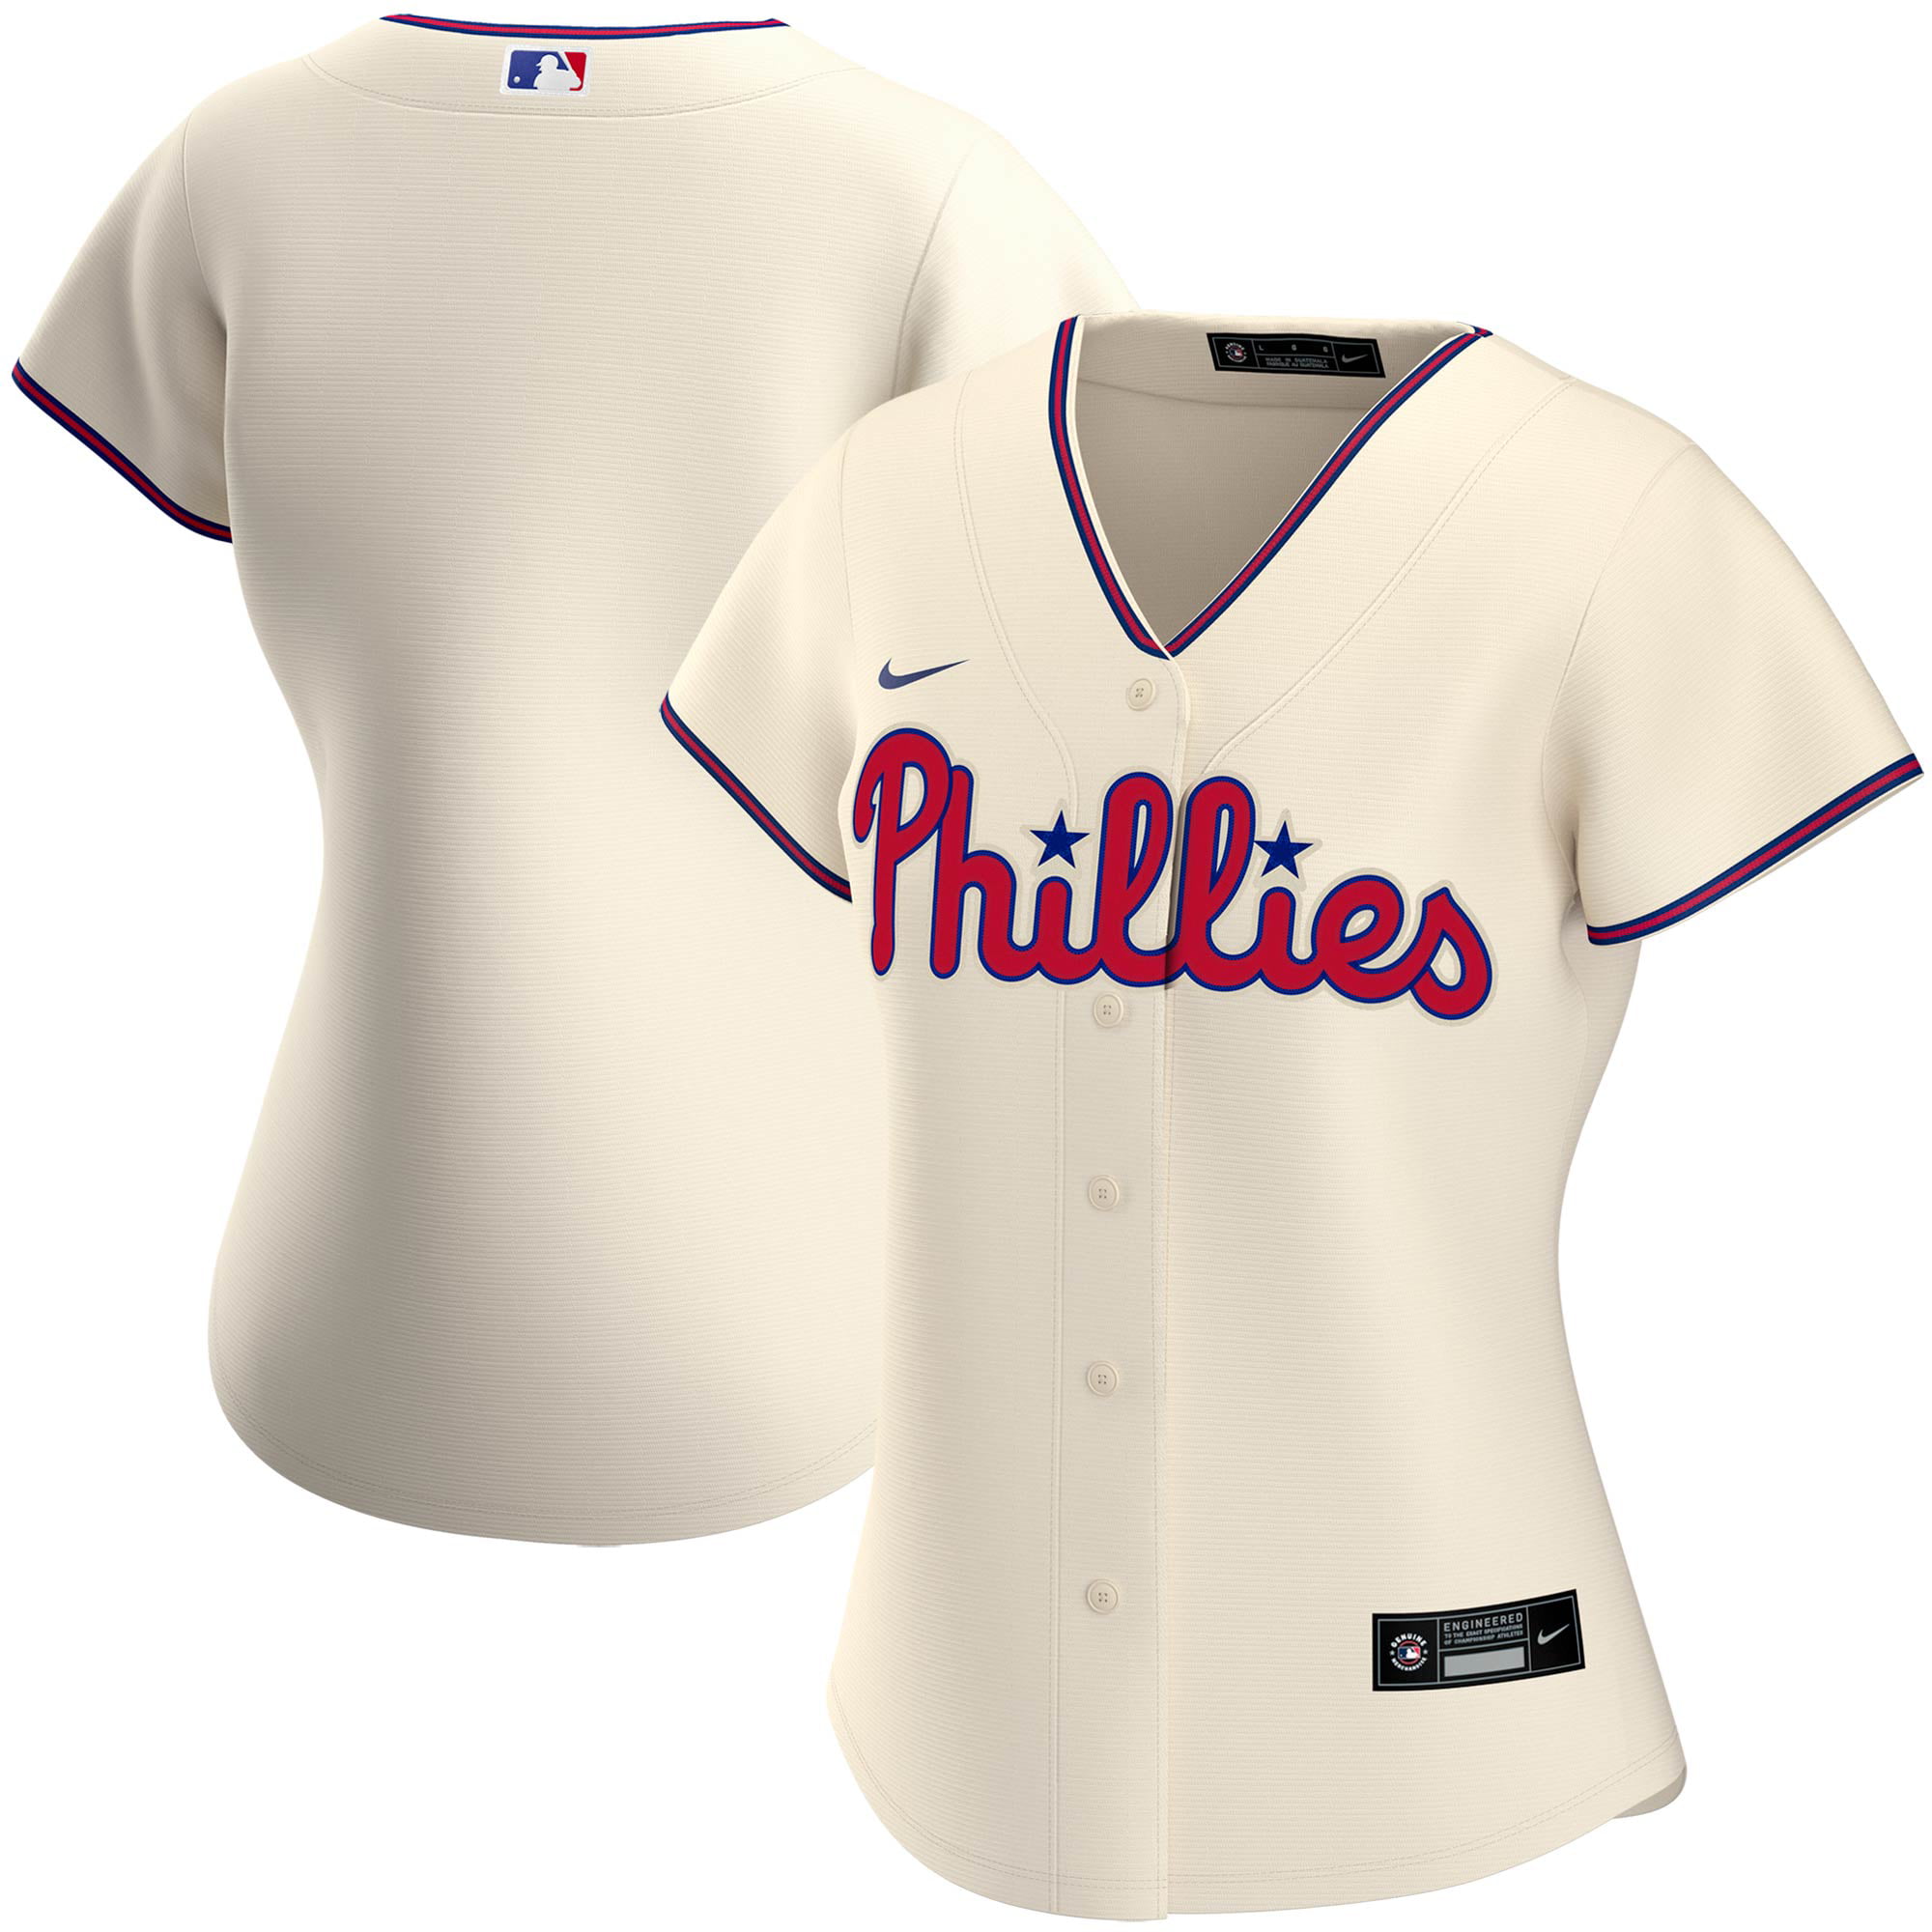 phillies cream jersey